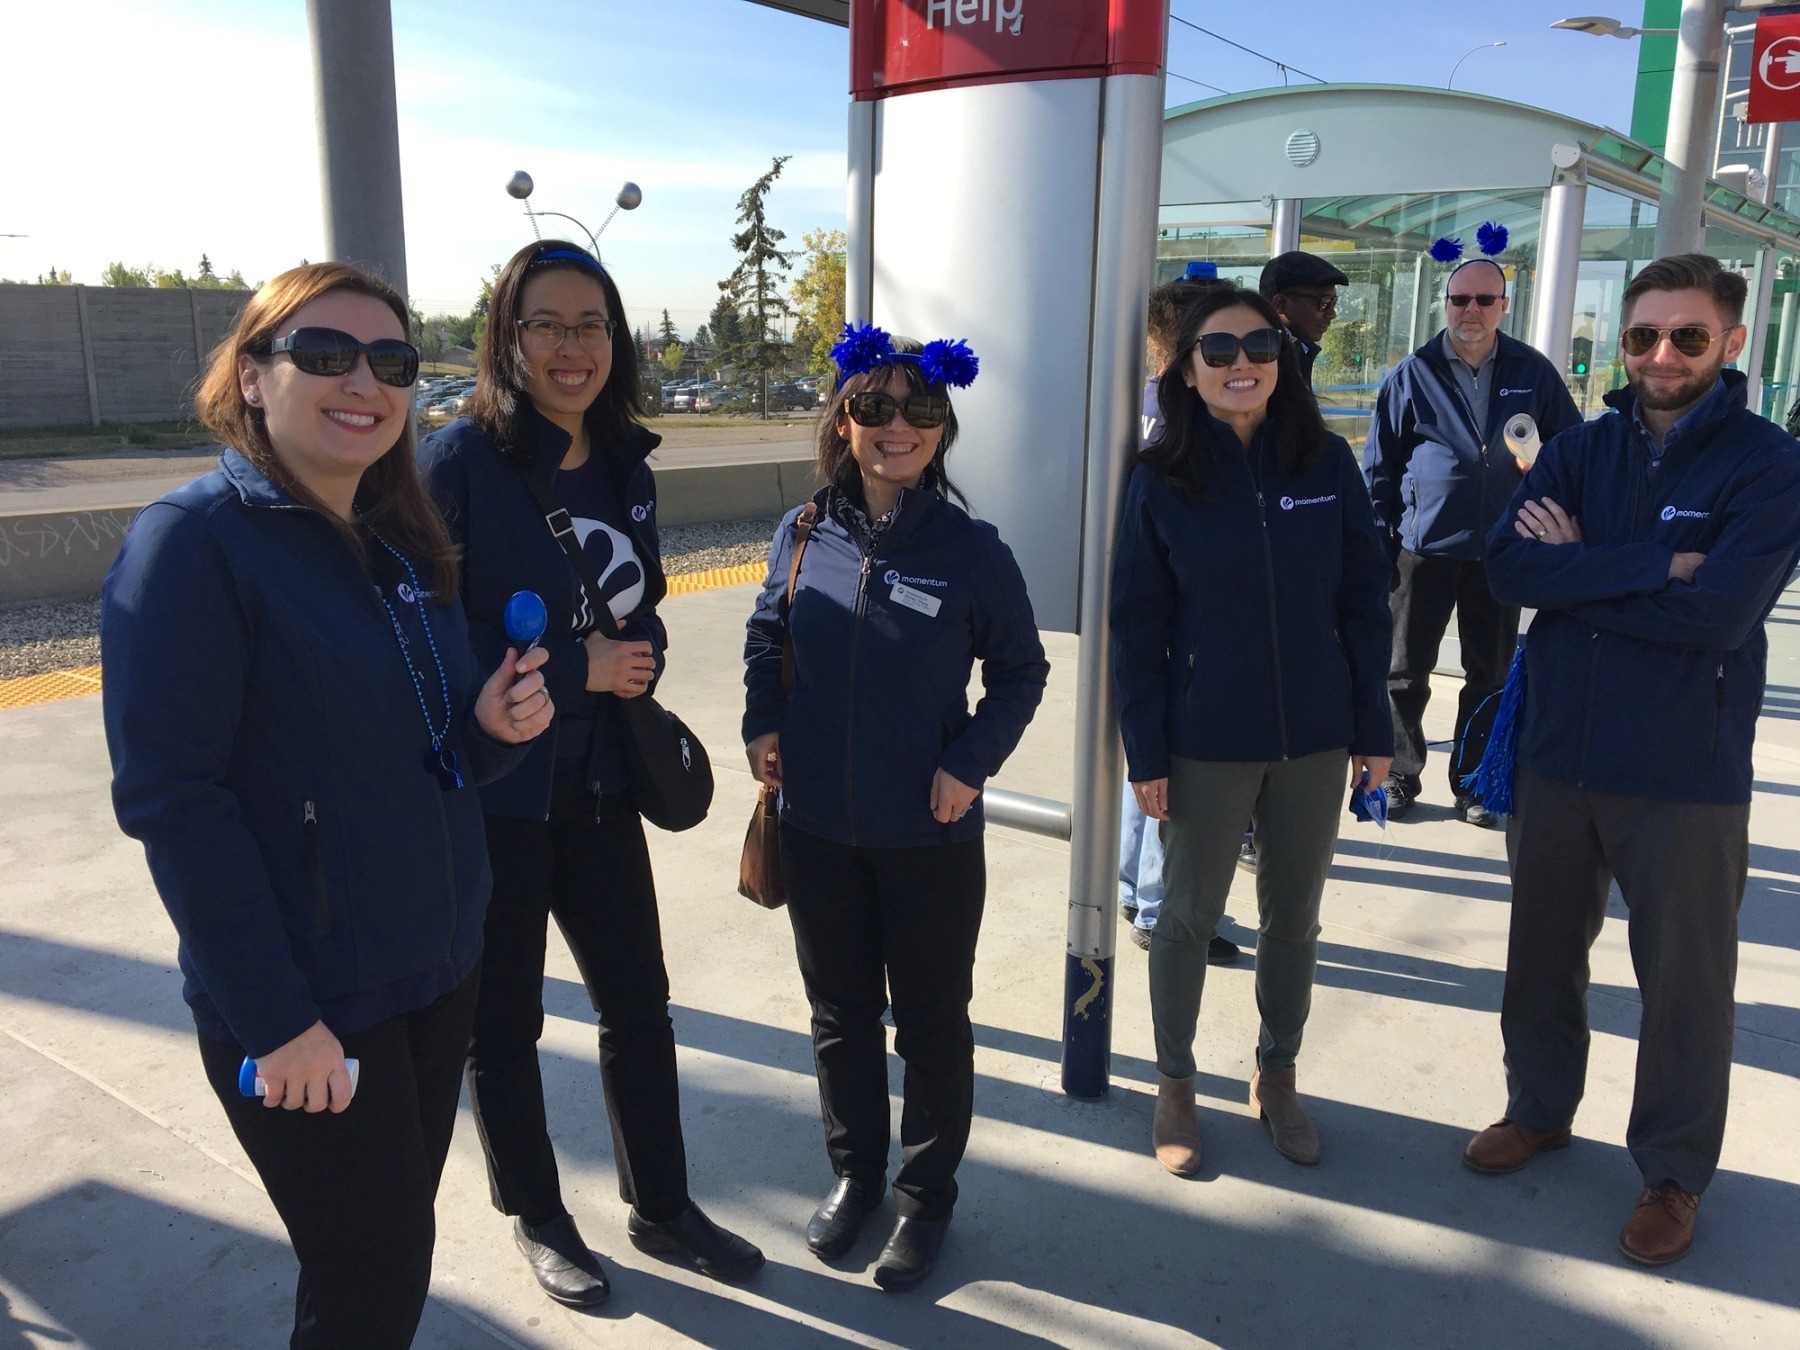 Six Momentum staff wearing blue jackets and pompom headbands stand together on a c-train platform.